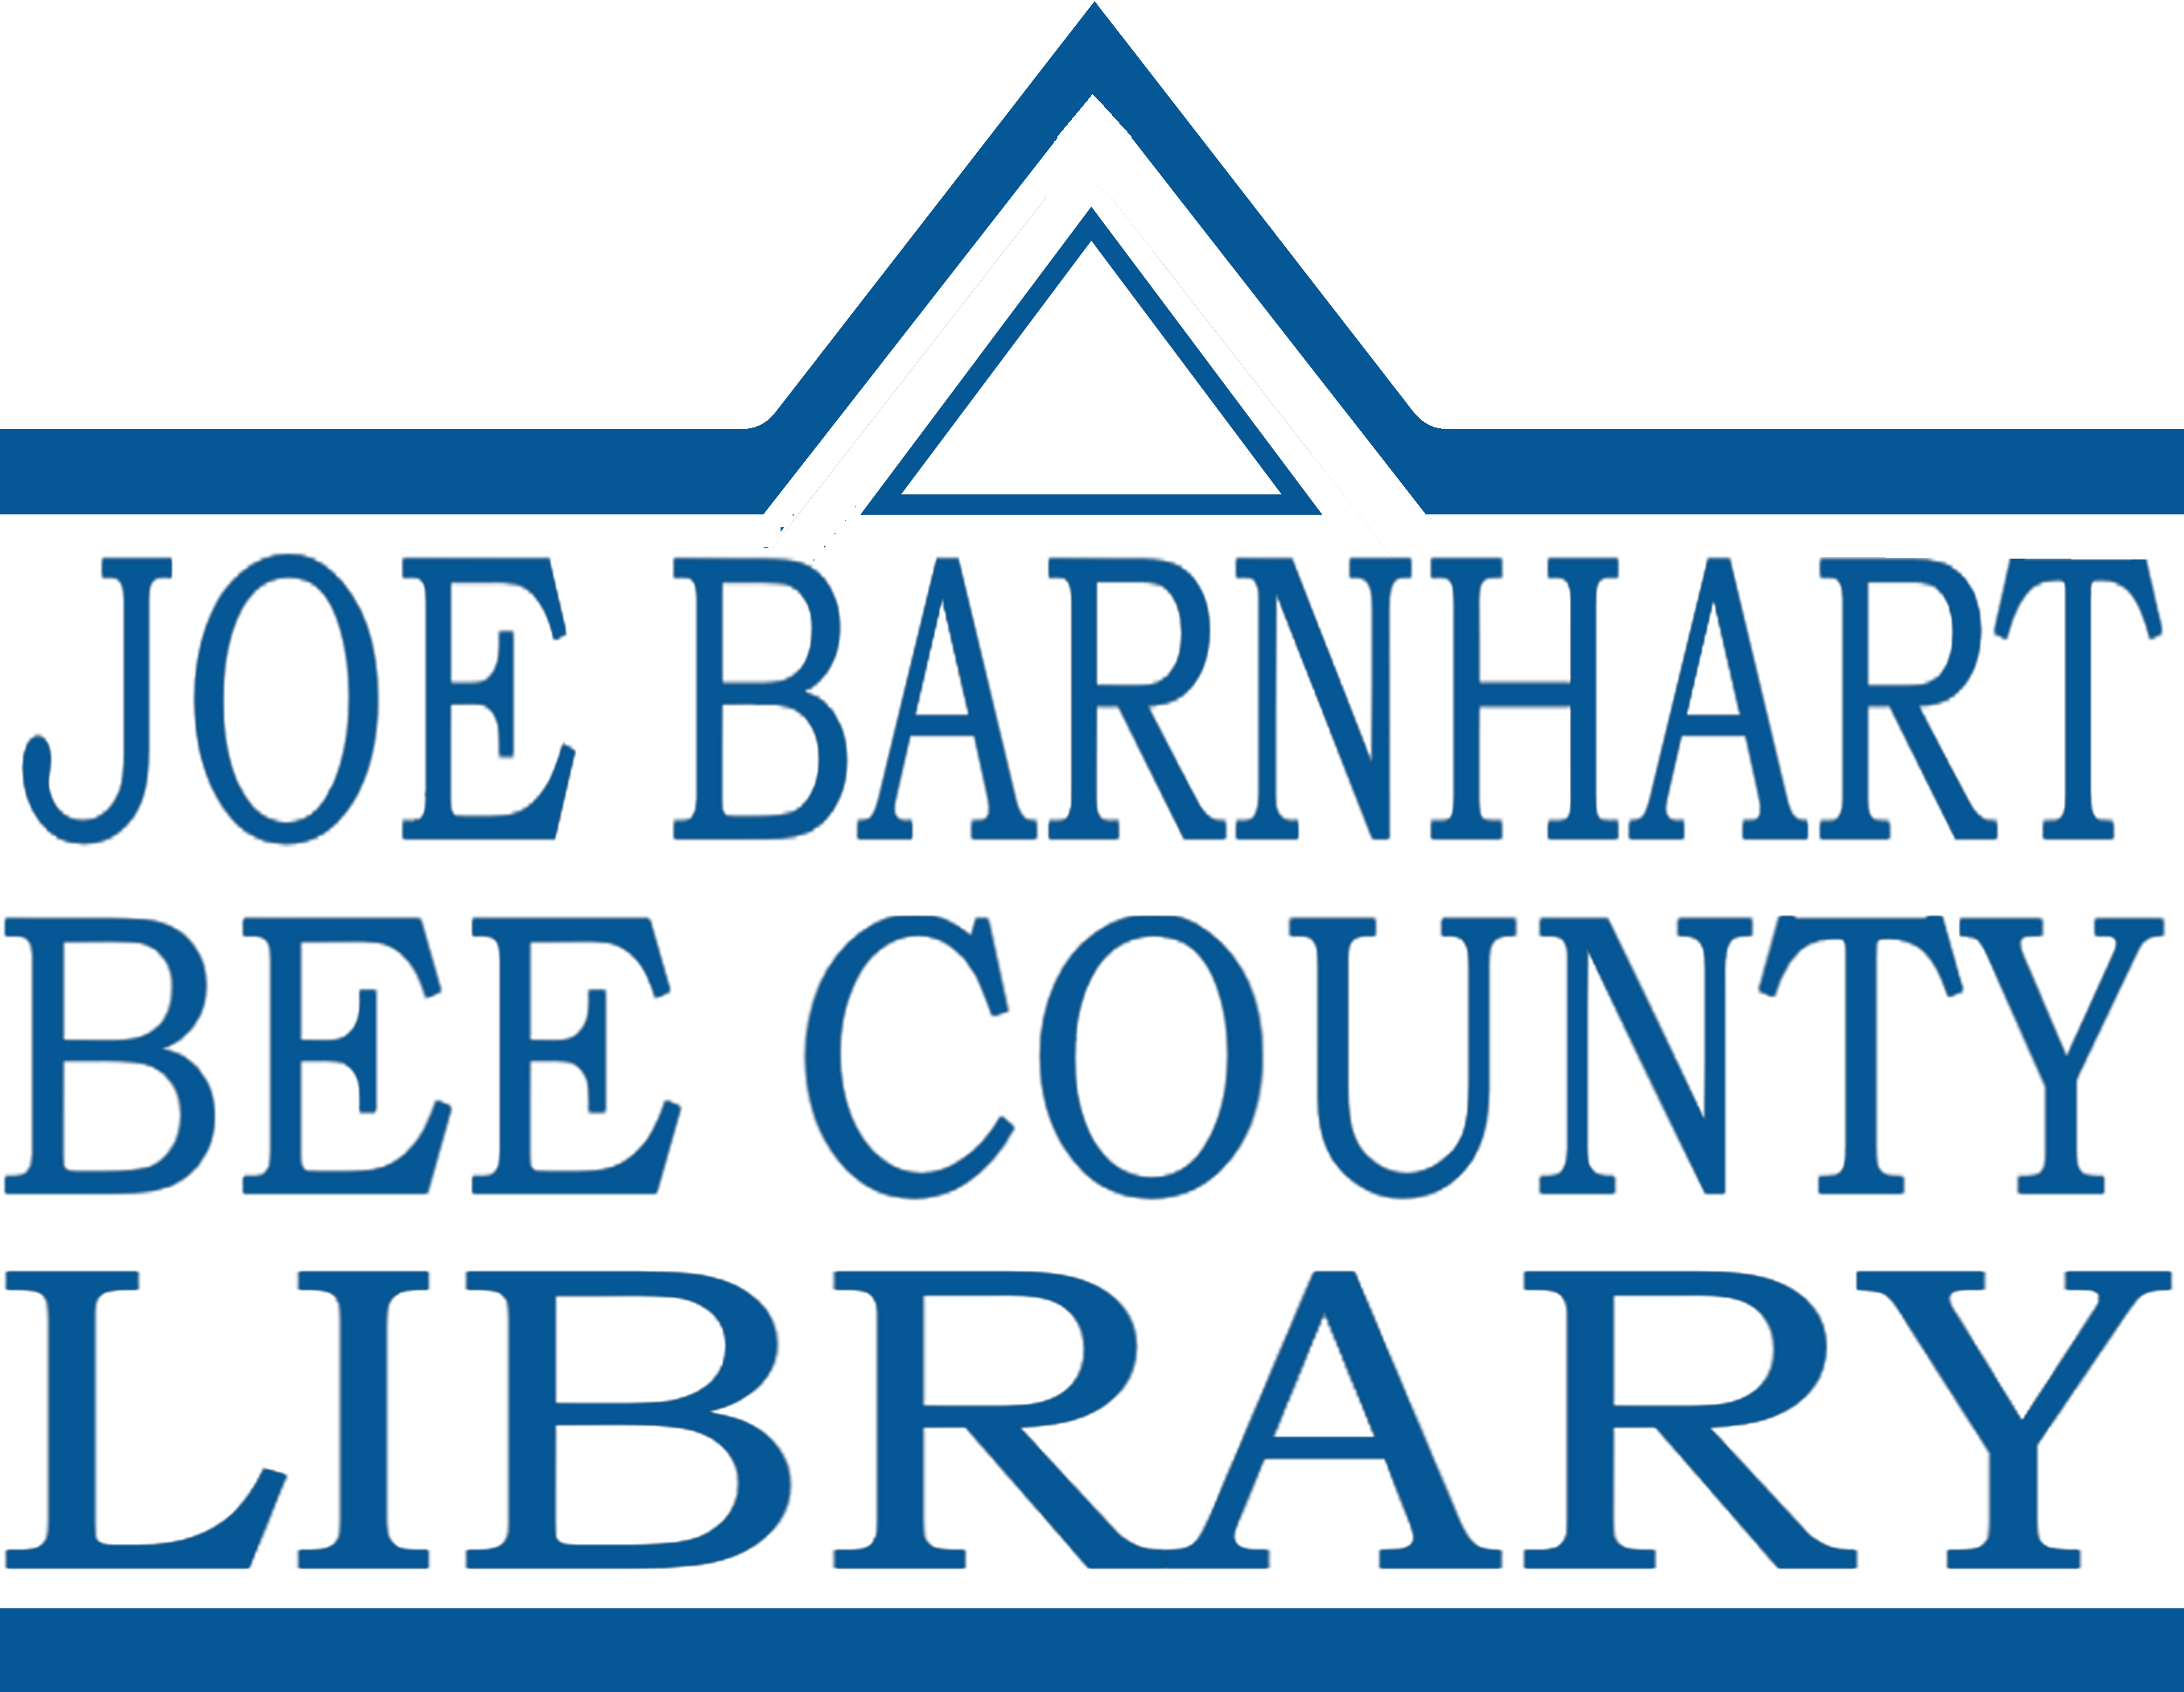 Joe Barnhart Bee County Library logo